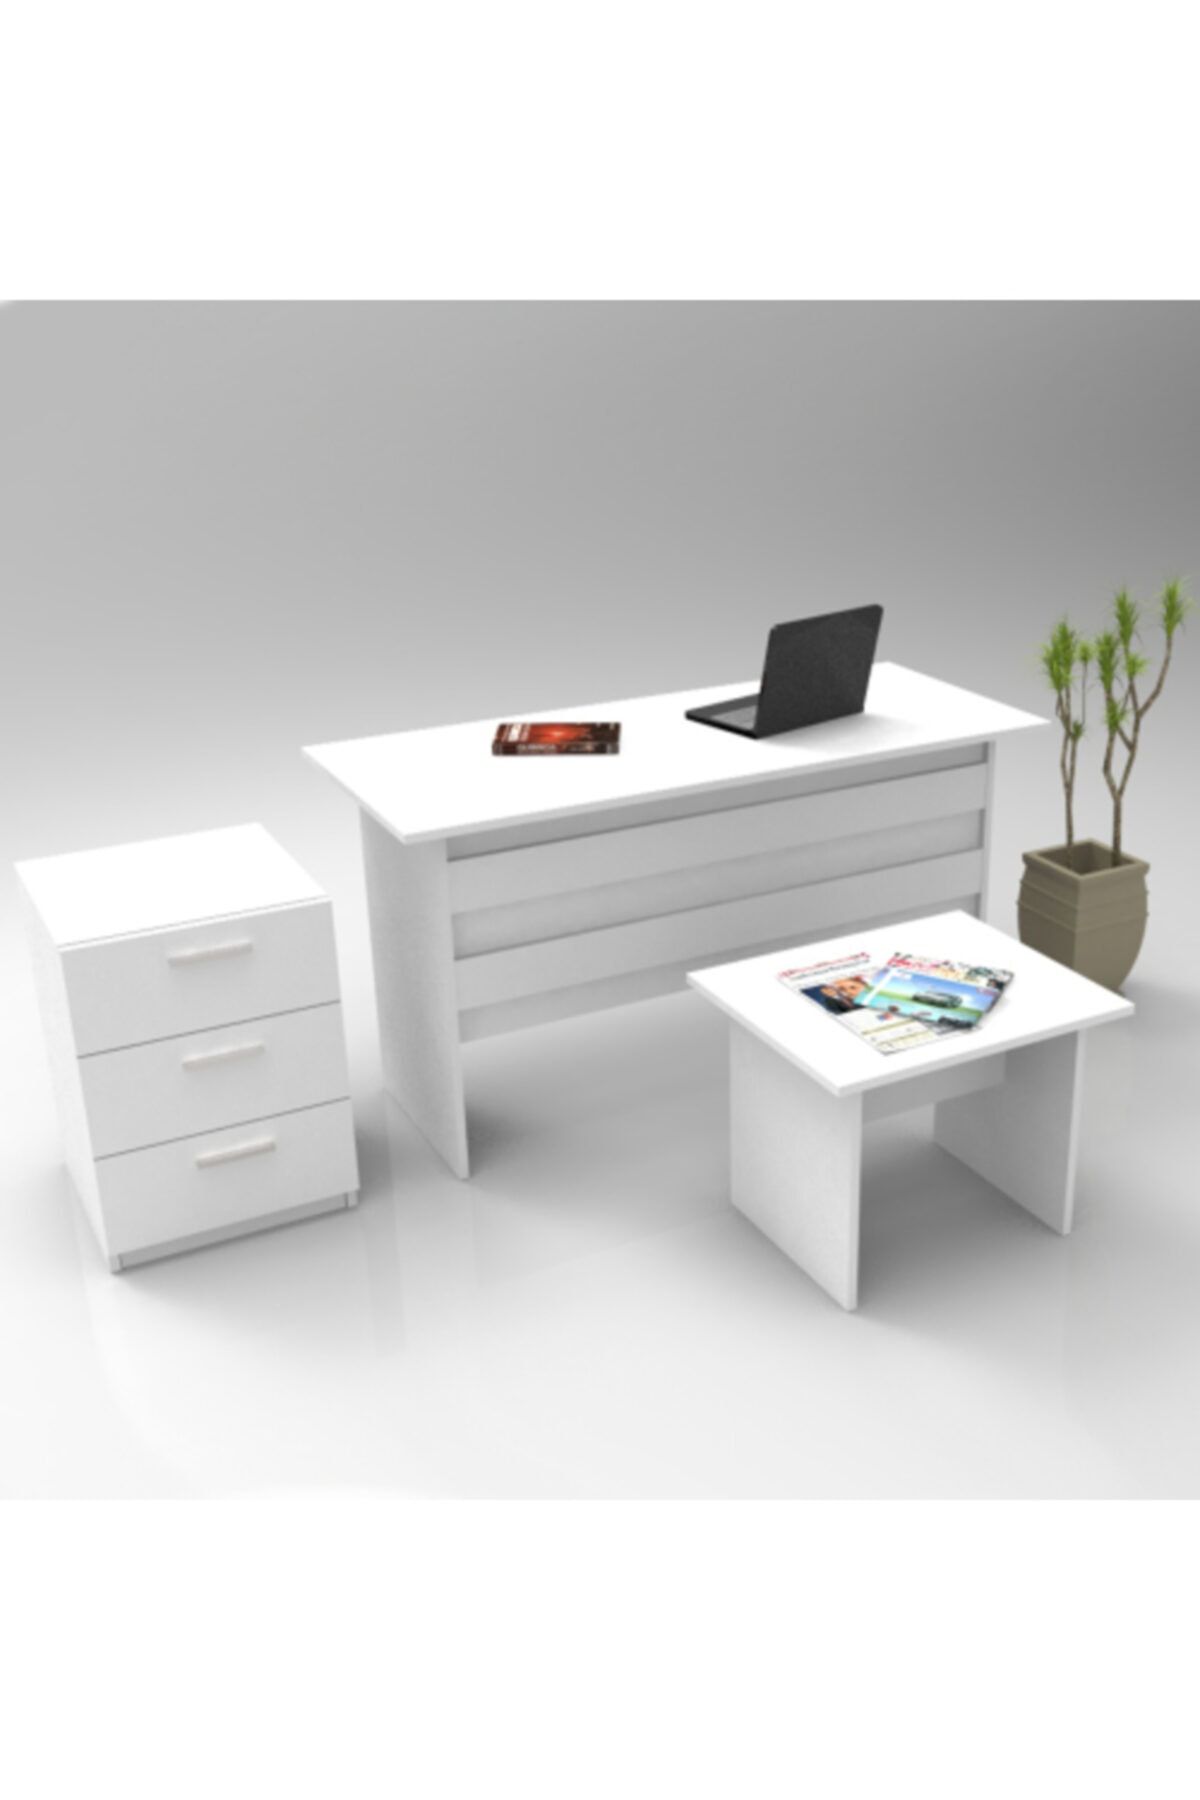 Robin Home Ofis Büro Masa Takımı Ofis Masası + Keson + Ofis Sehpası